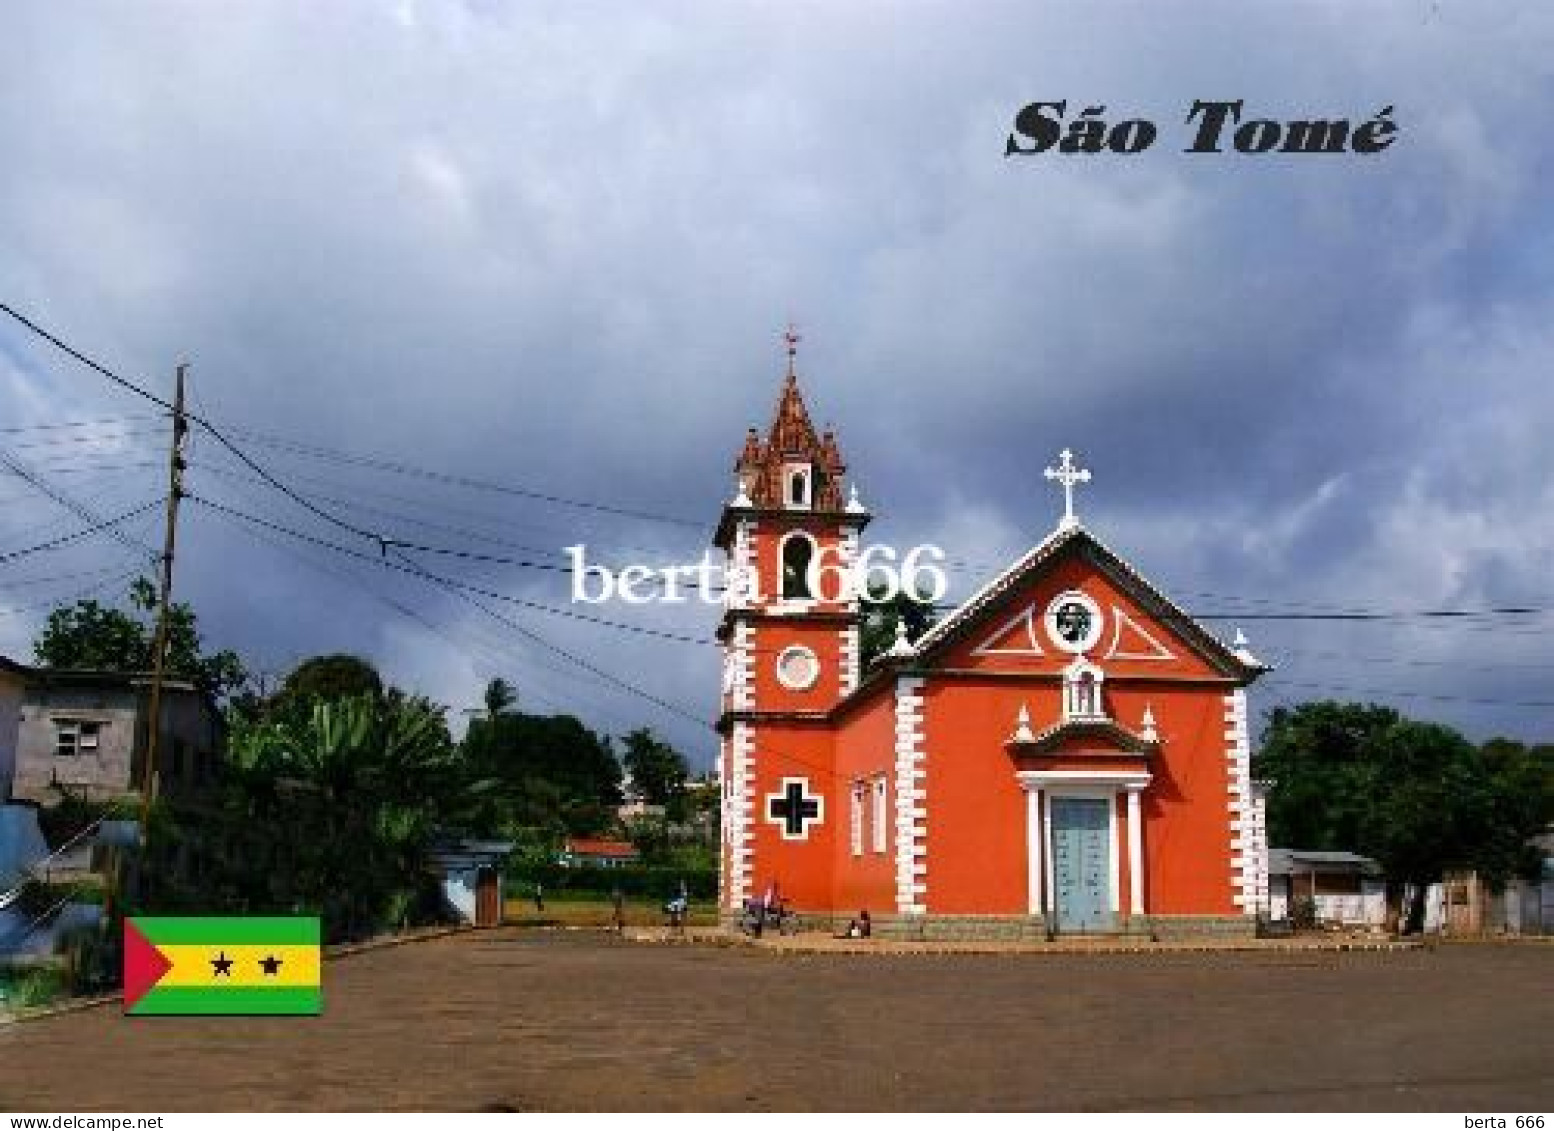 Sao Tome And Principe Pantufo St. Peter Church New Postcard - Sao Tome Et Principe